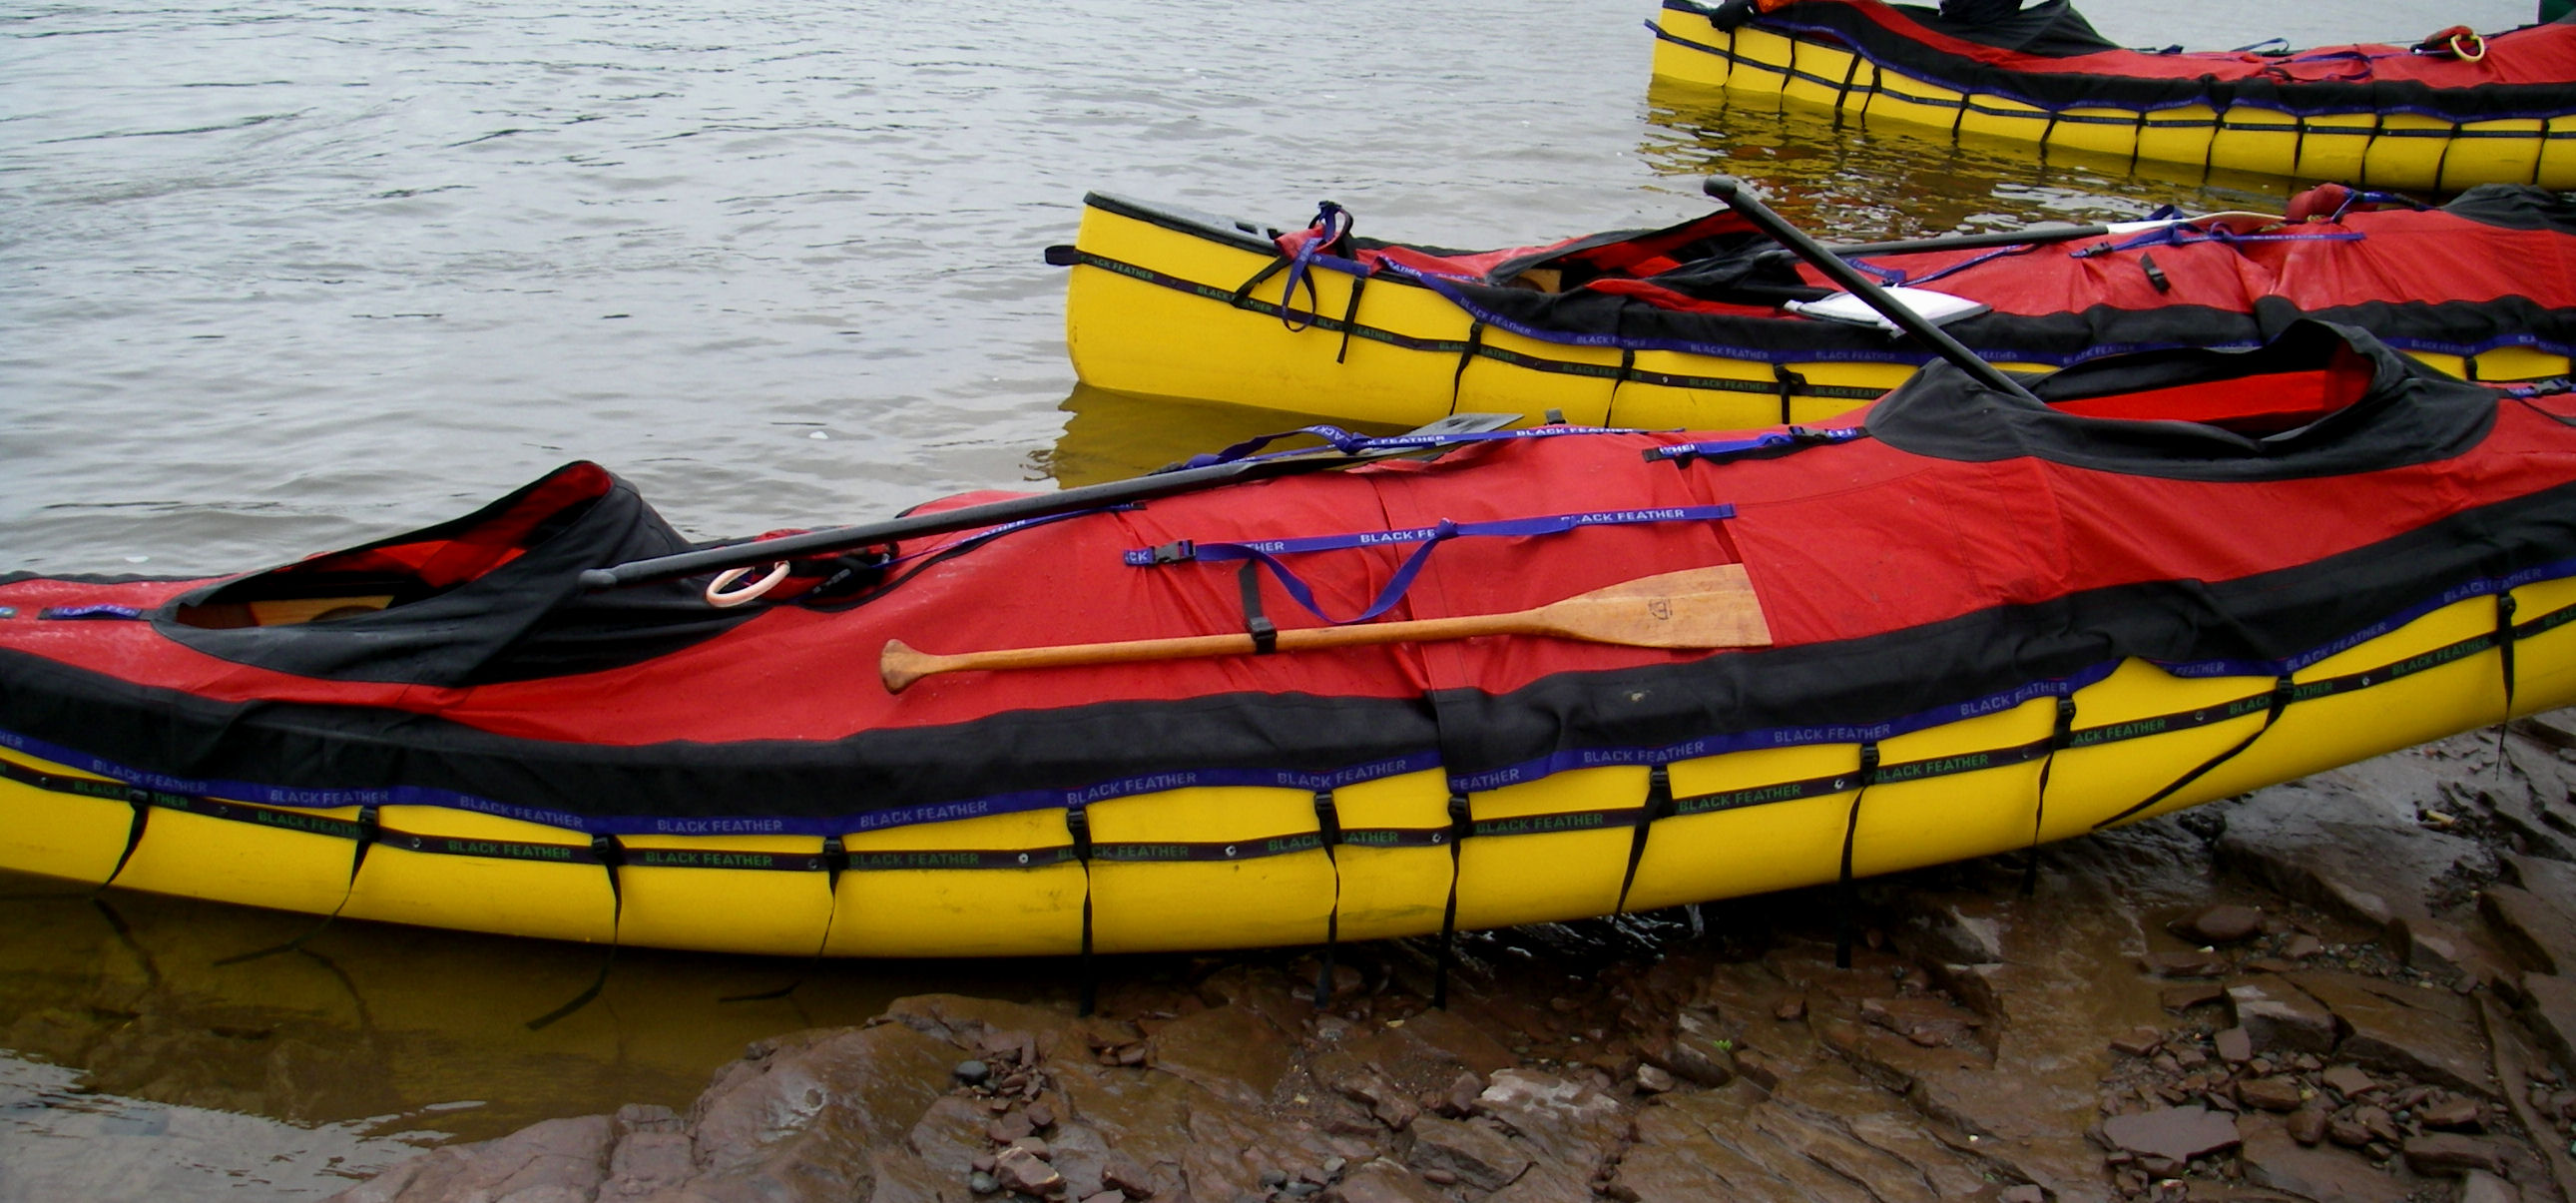 File:Canoes with spraydecks.jpg - Wikimedia Commons